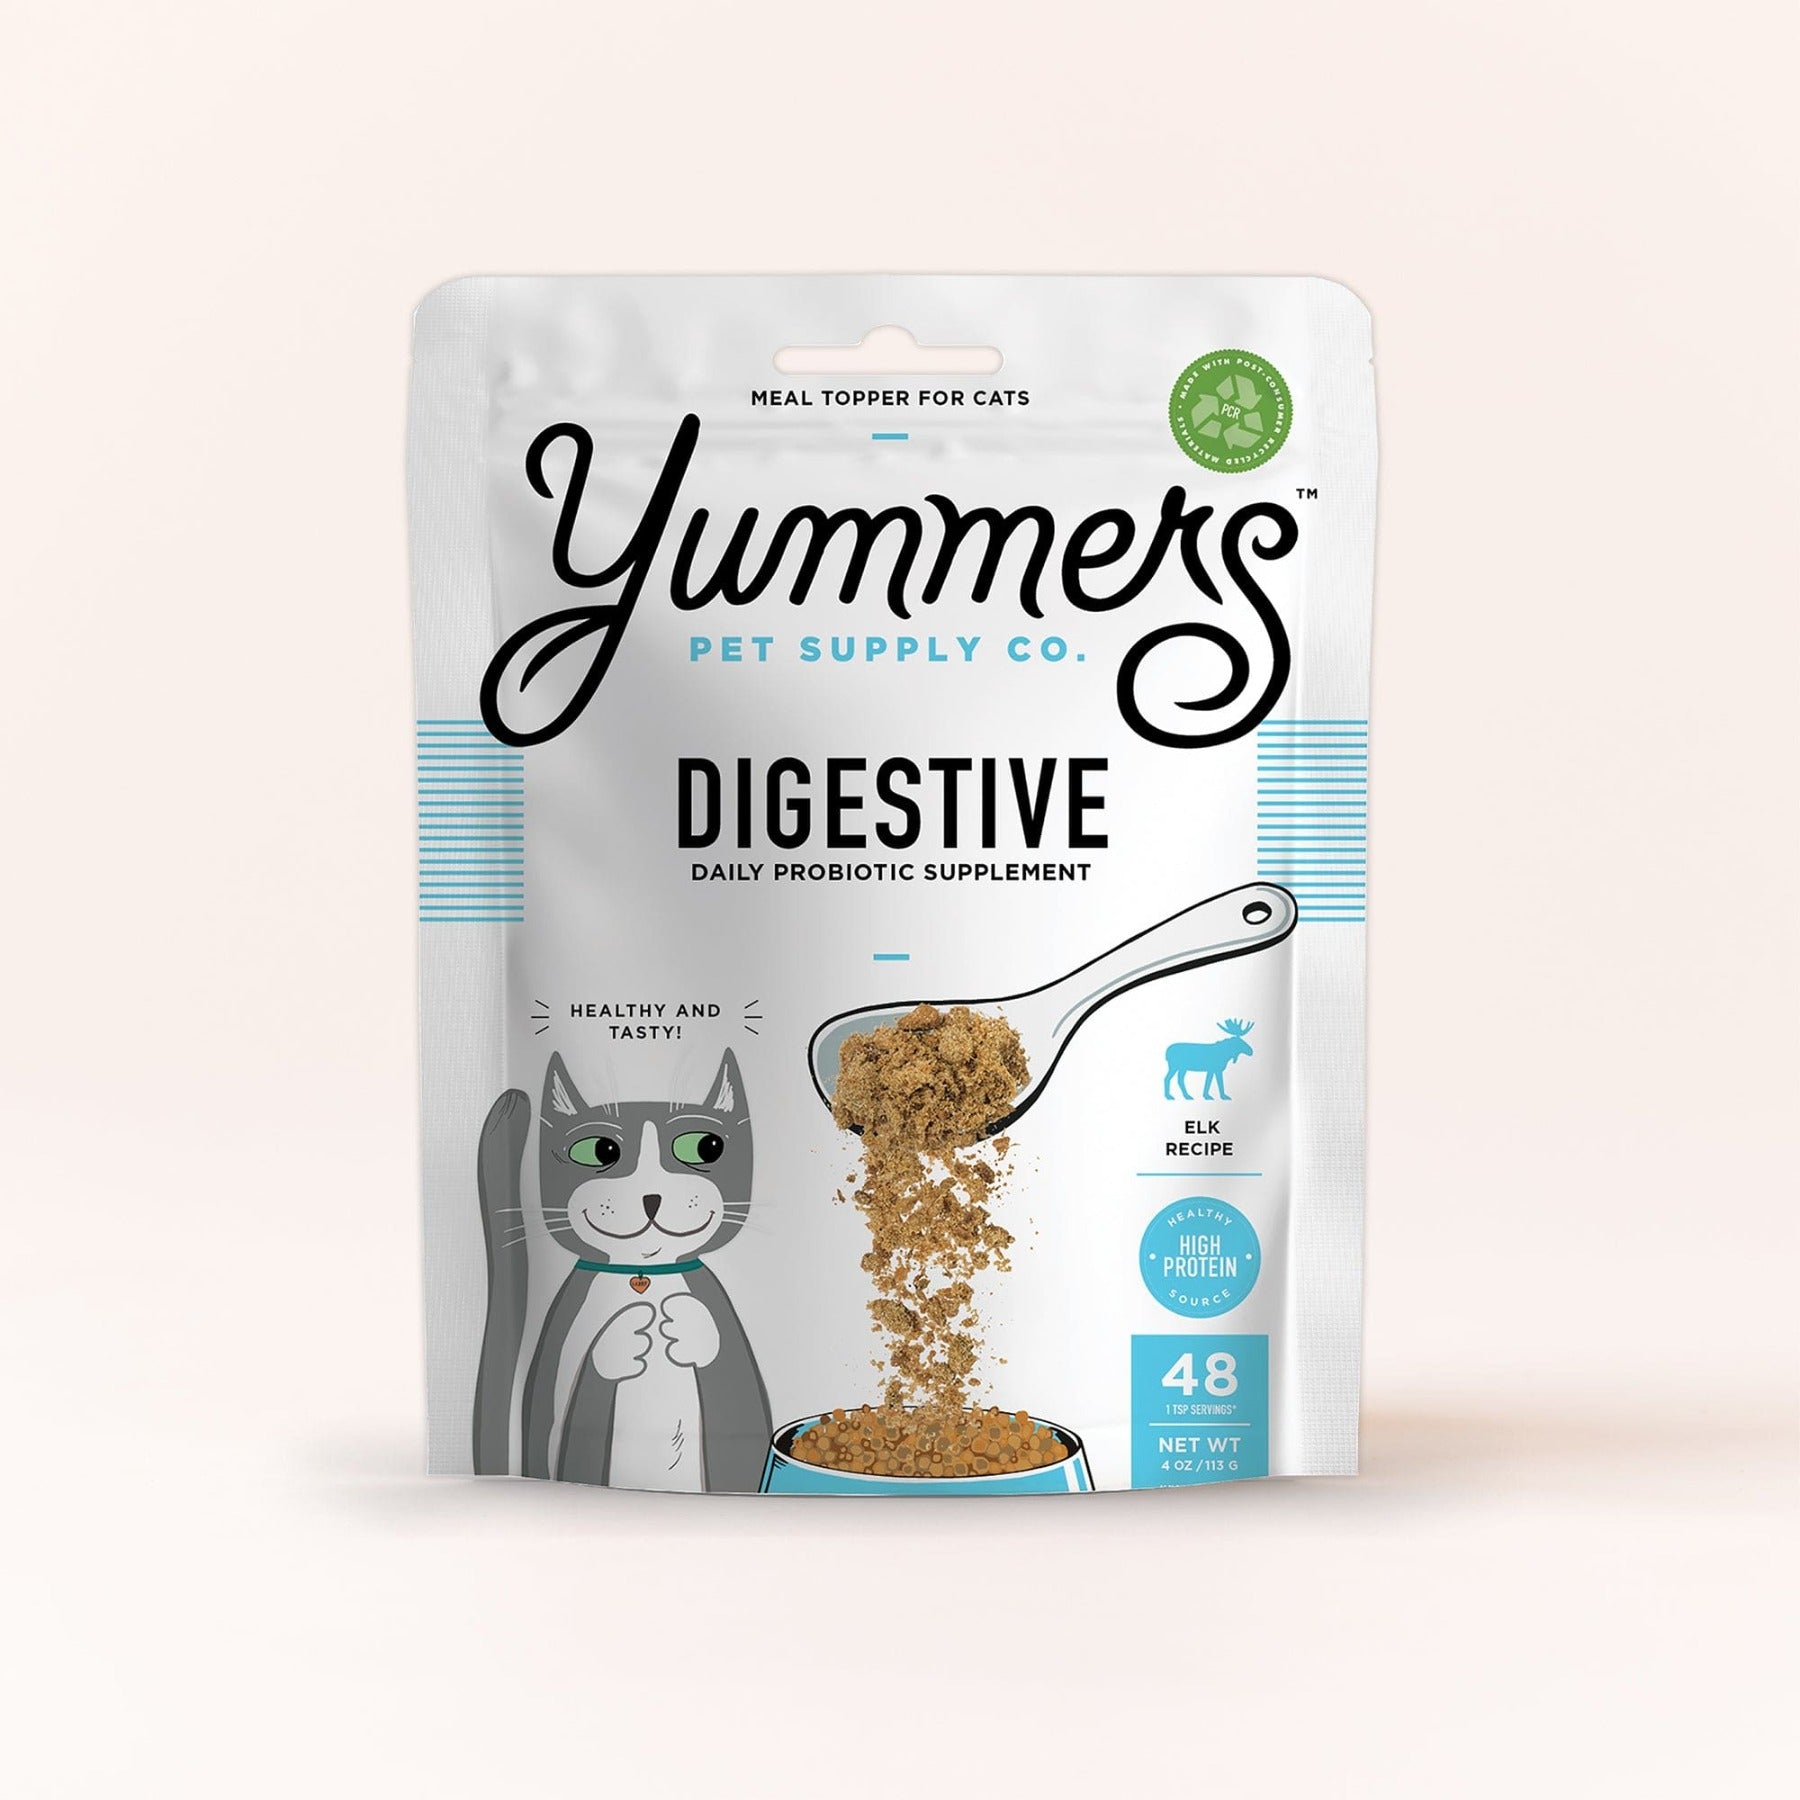 Yummers Digestive Supplement